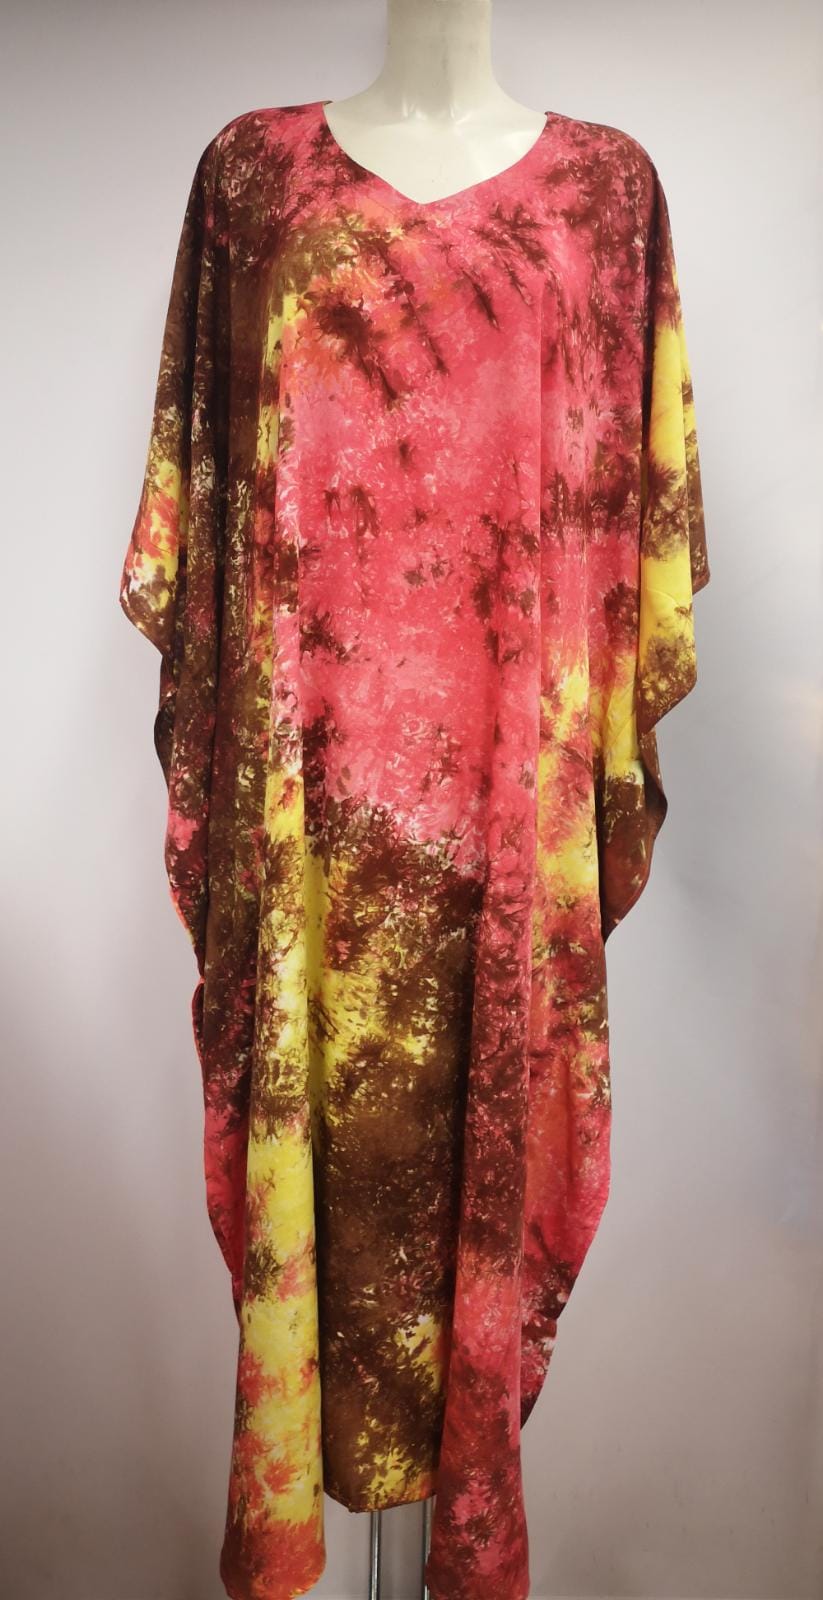 Ikat Tie Dye Kaftan – Brown, Pink & Yellow - Kaftans direct